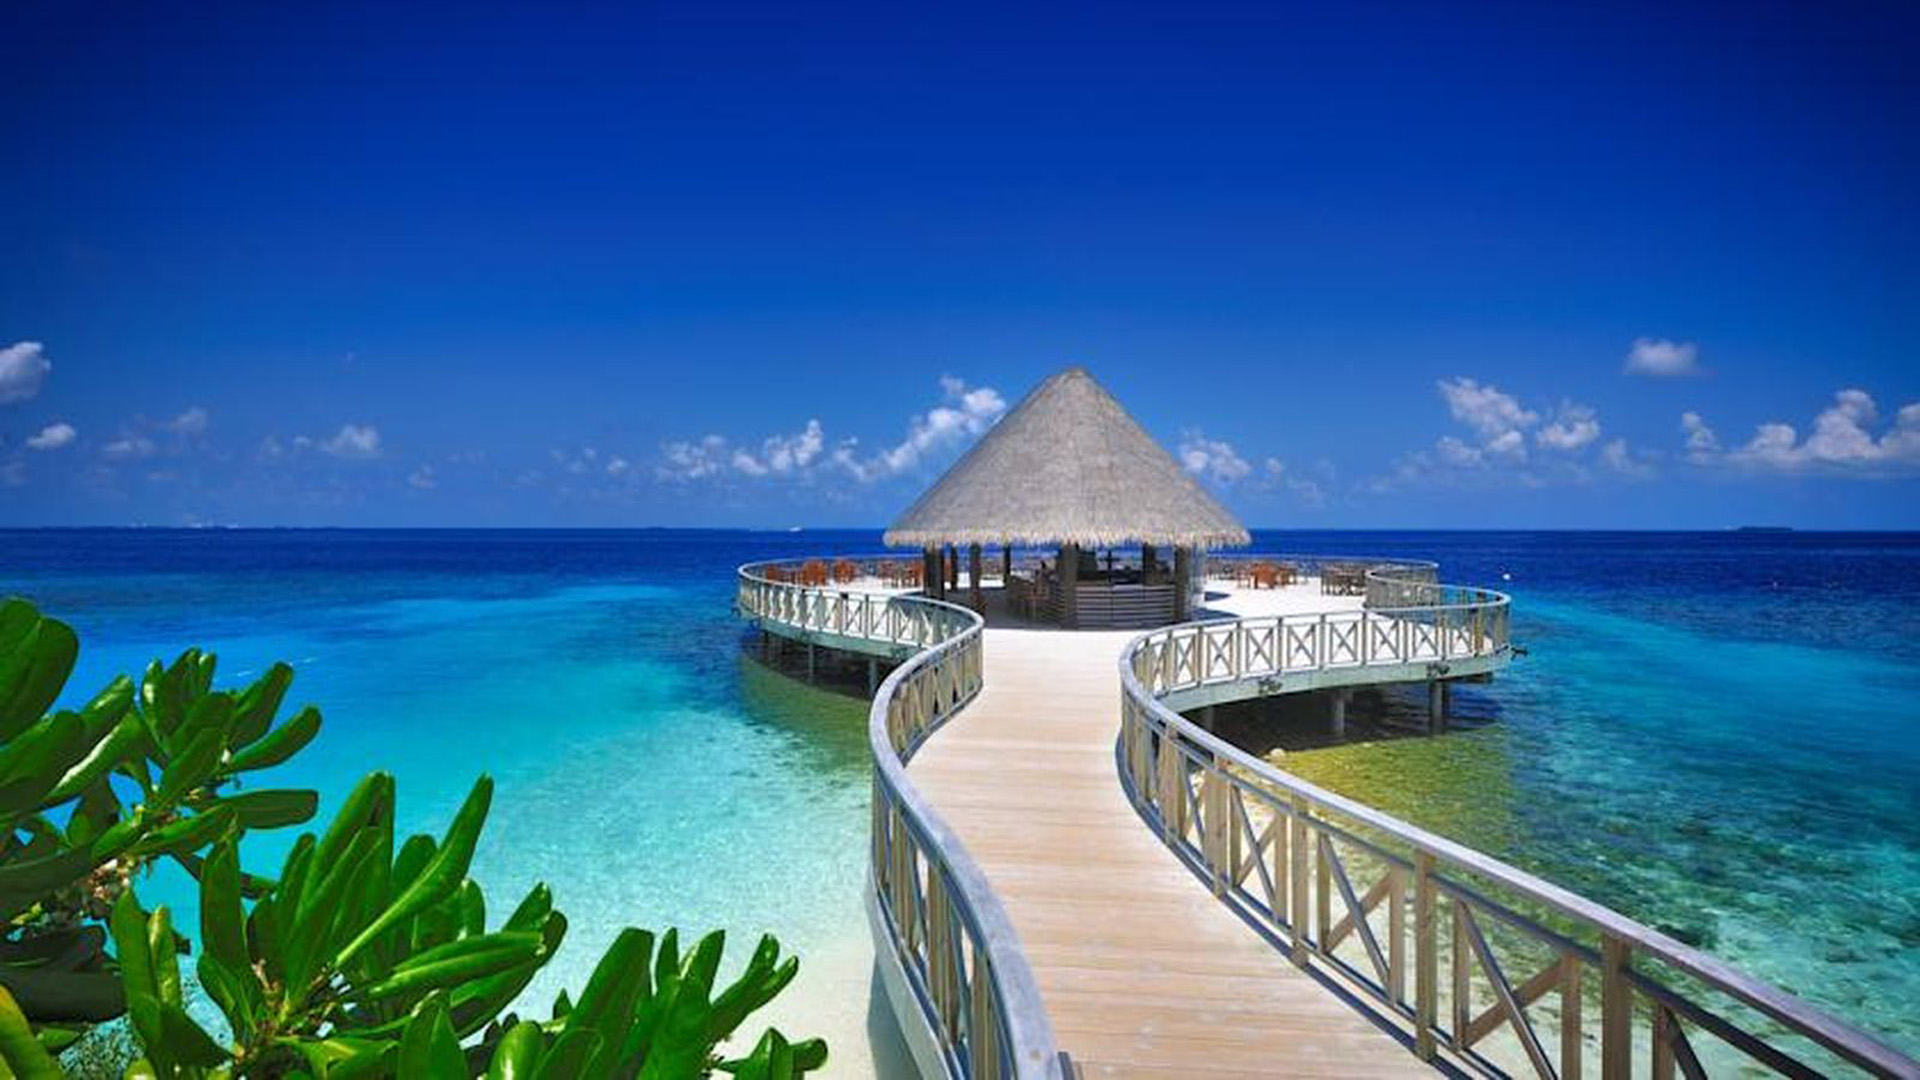 Bandos island resort. Bandos Island Resort Spa Мальдивы. Bandos Maldives 4 Мальдивы. Мальдивы Мале остров Bandos. Bandos Maldives (ex. Bandos Island Resort) 4*.